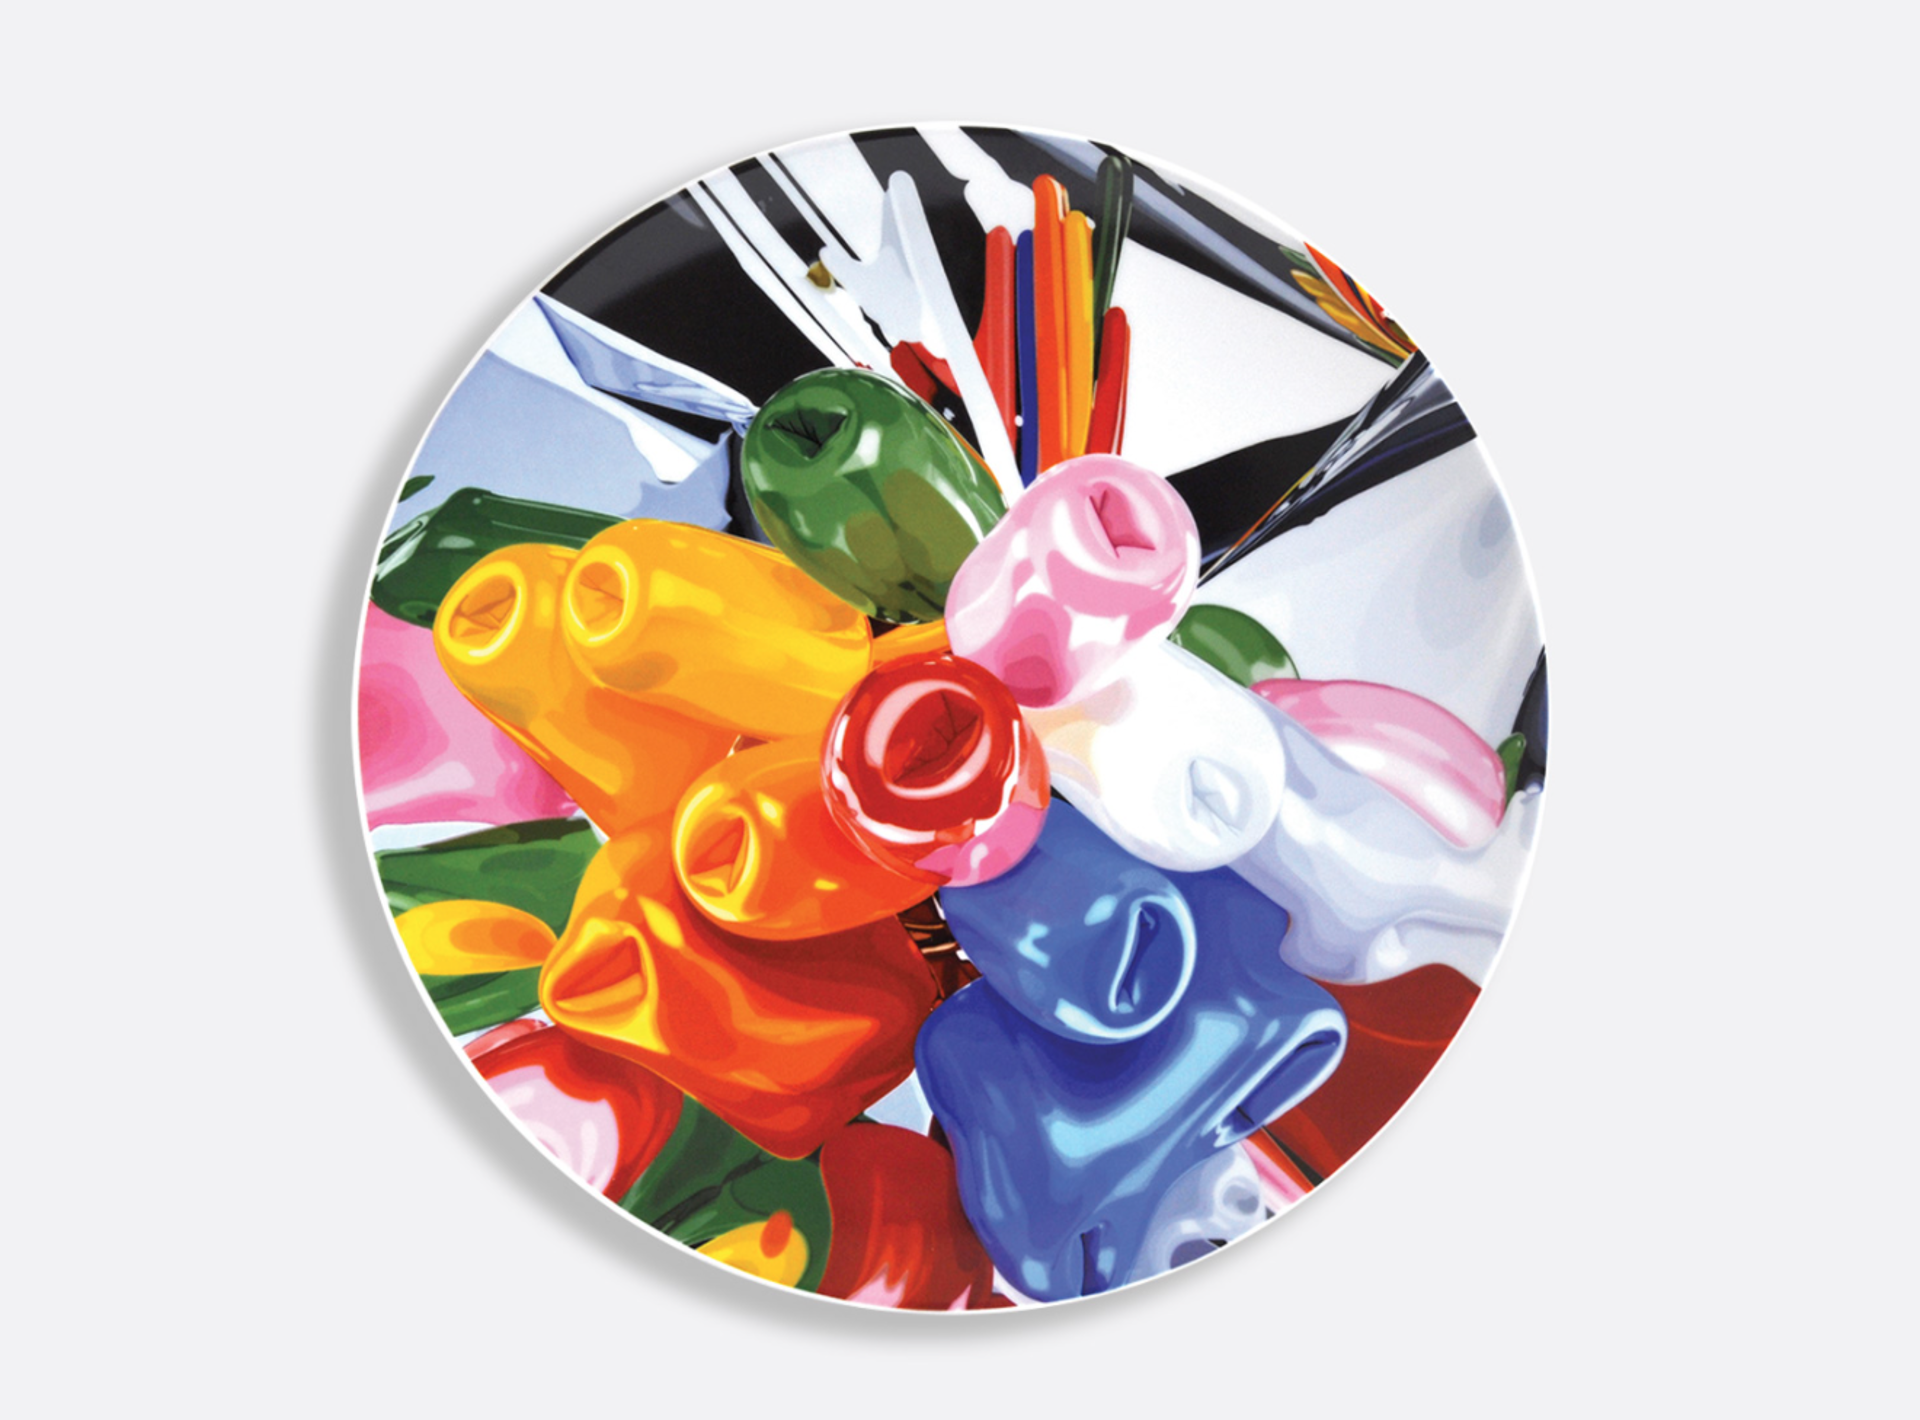 Tulips - Coupe service plate by Jeff Koons x Bernardaud